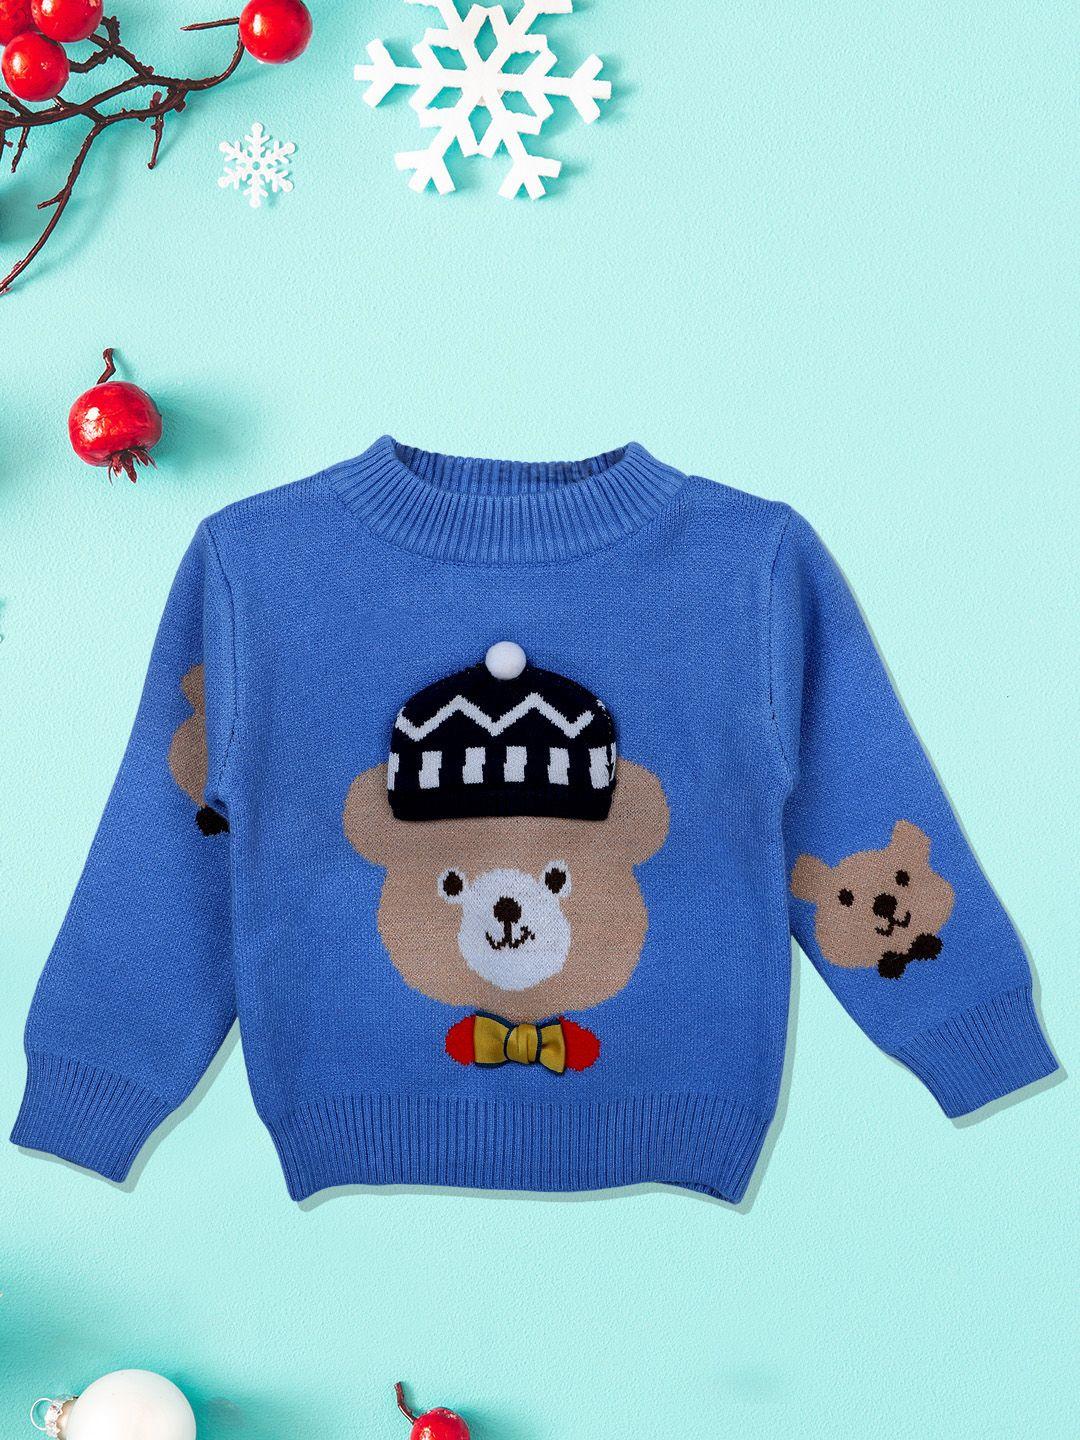 baby-moo-unisex-kids-blue-&-black-mr.-bear-premium-full-sleeves-knitted-sweater-pullover